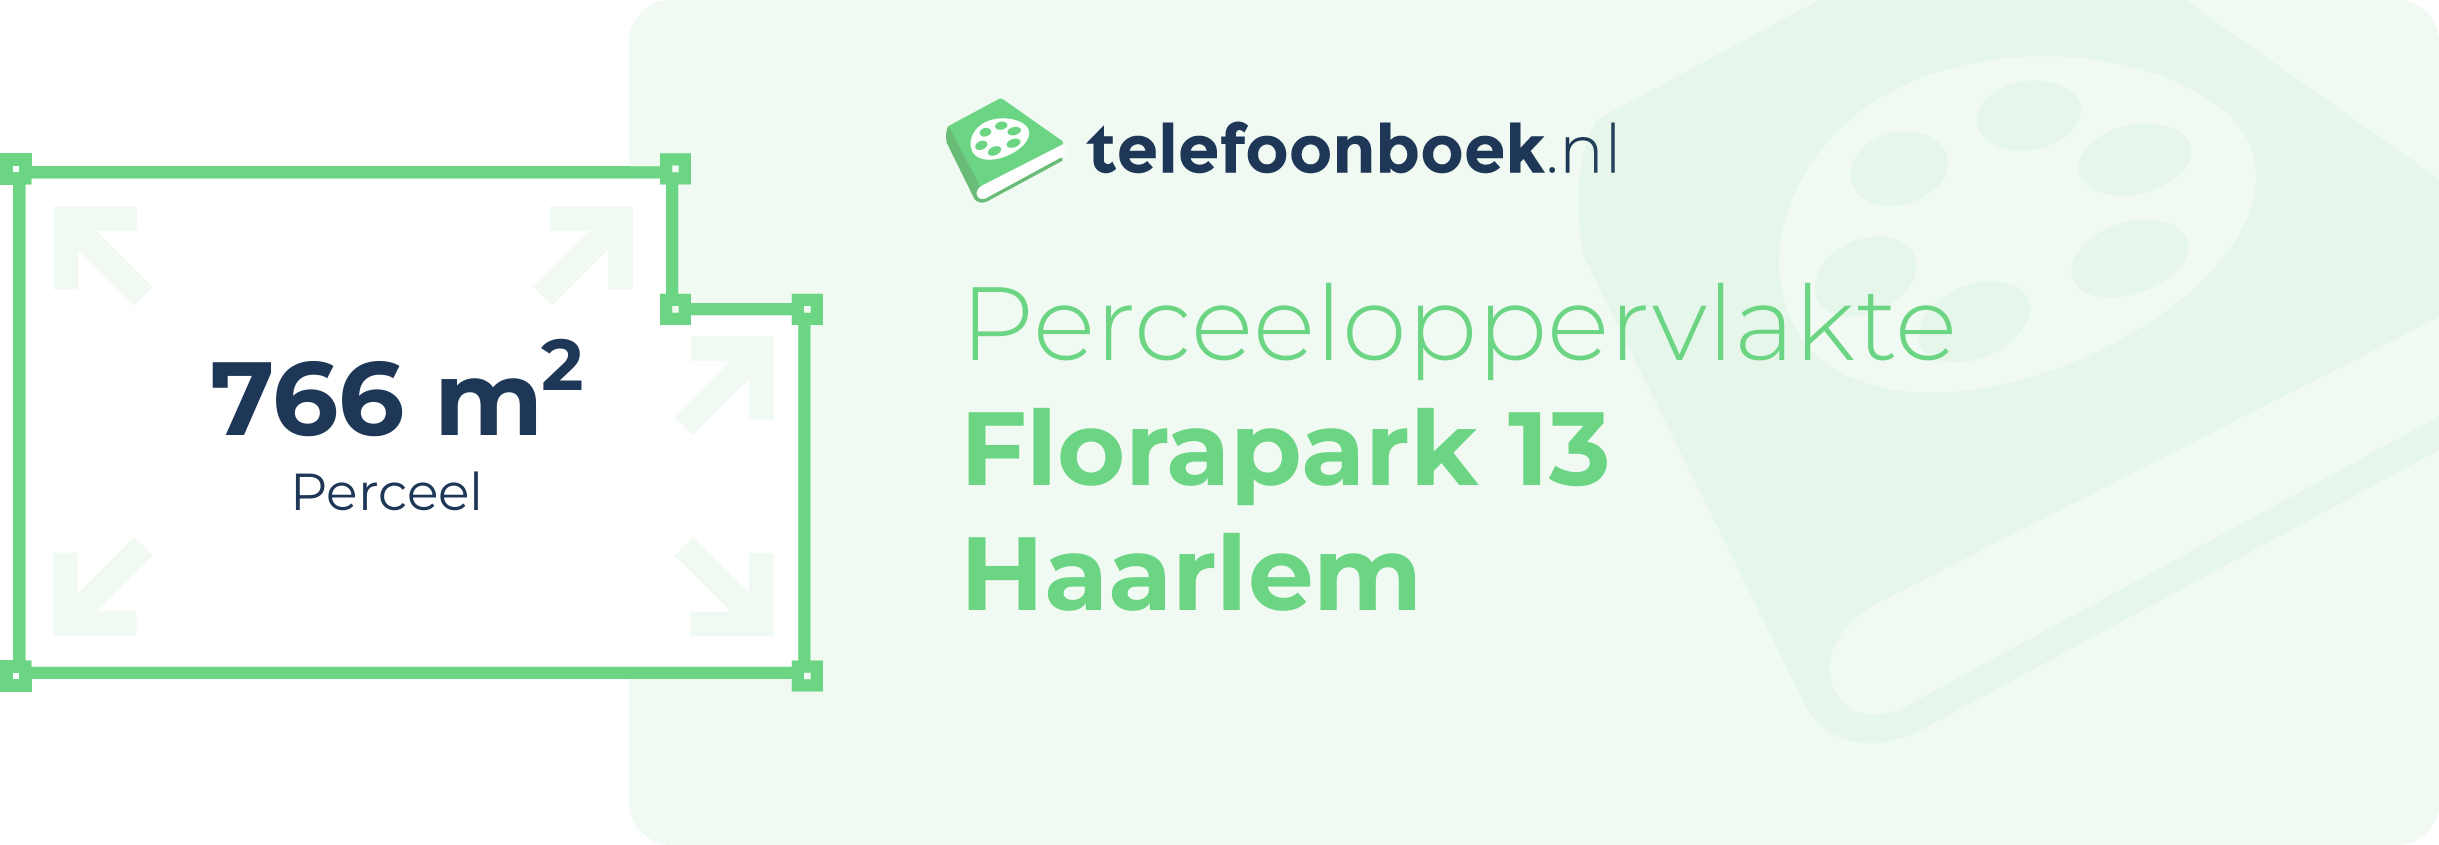 Perceeloppervlakte Florapark 13 Haarlem